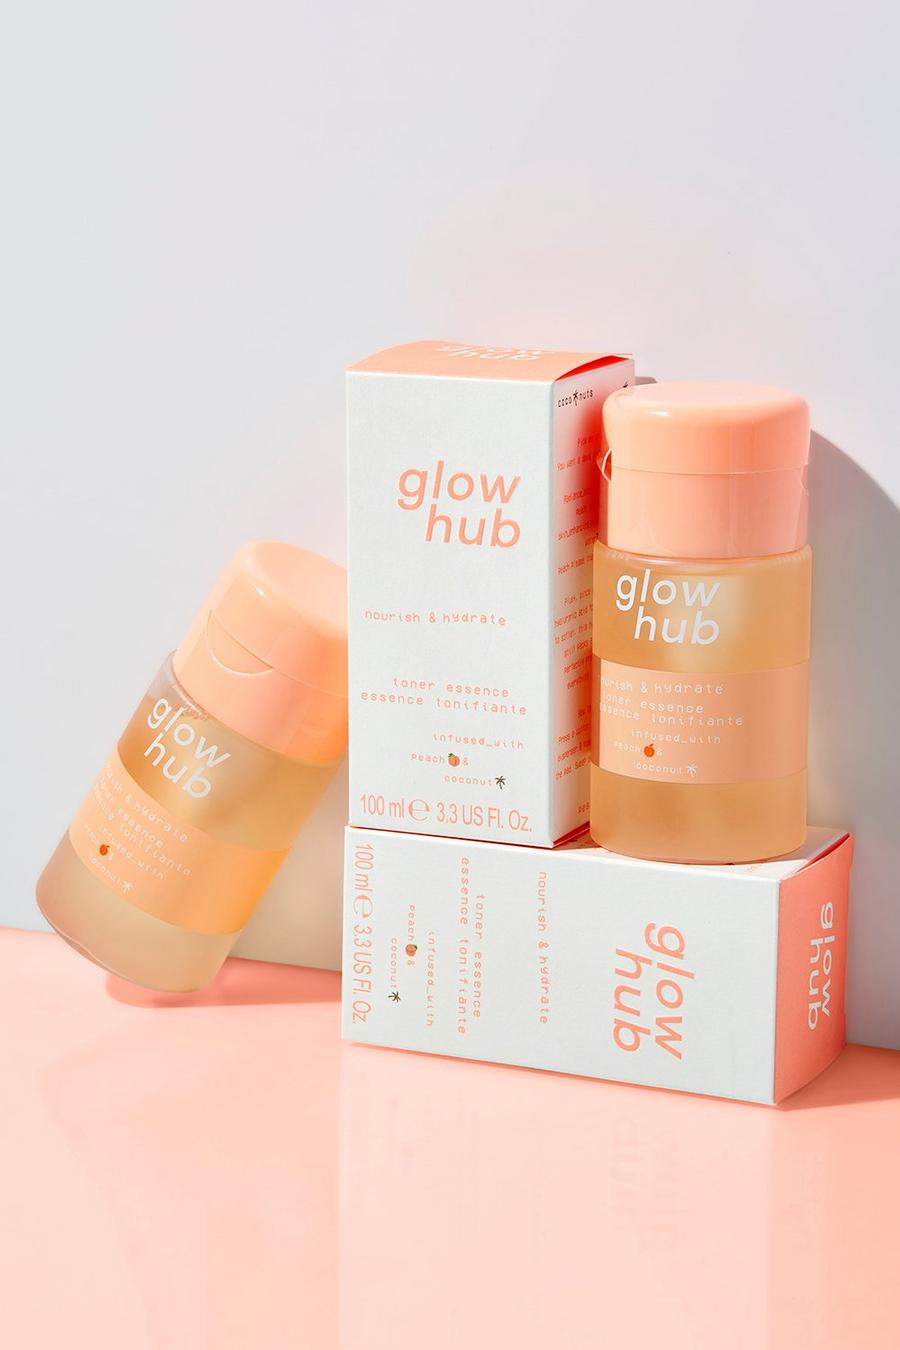 Orange Glow Hub nourish & hydrate toner essence